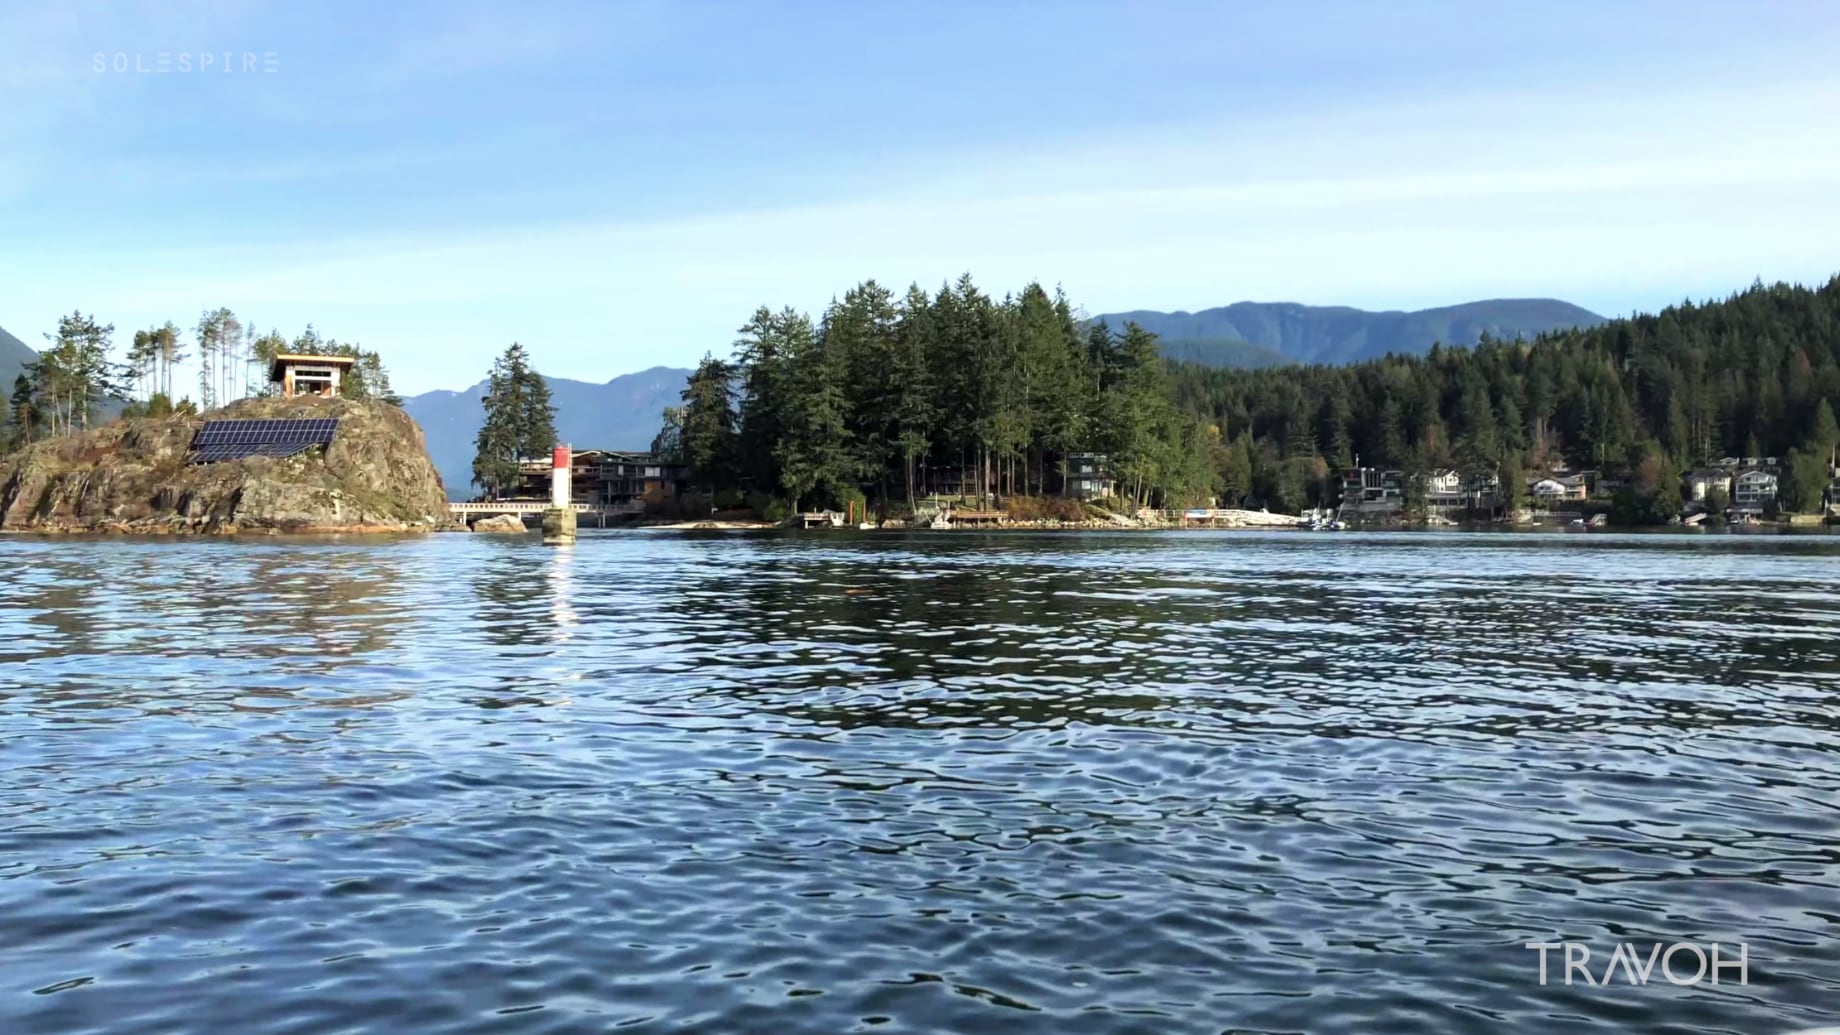 Ocean Ambience Nature Sounds - Belcarra - Relaxing - British Columbia, Canada - 4K Video - Travel